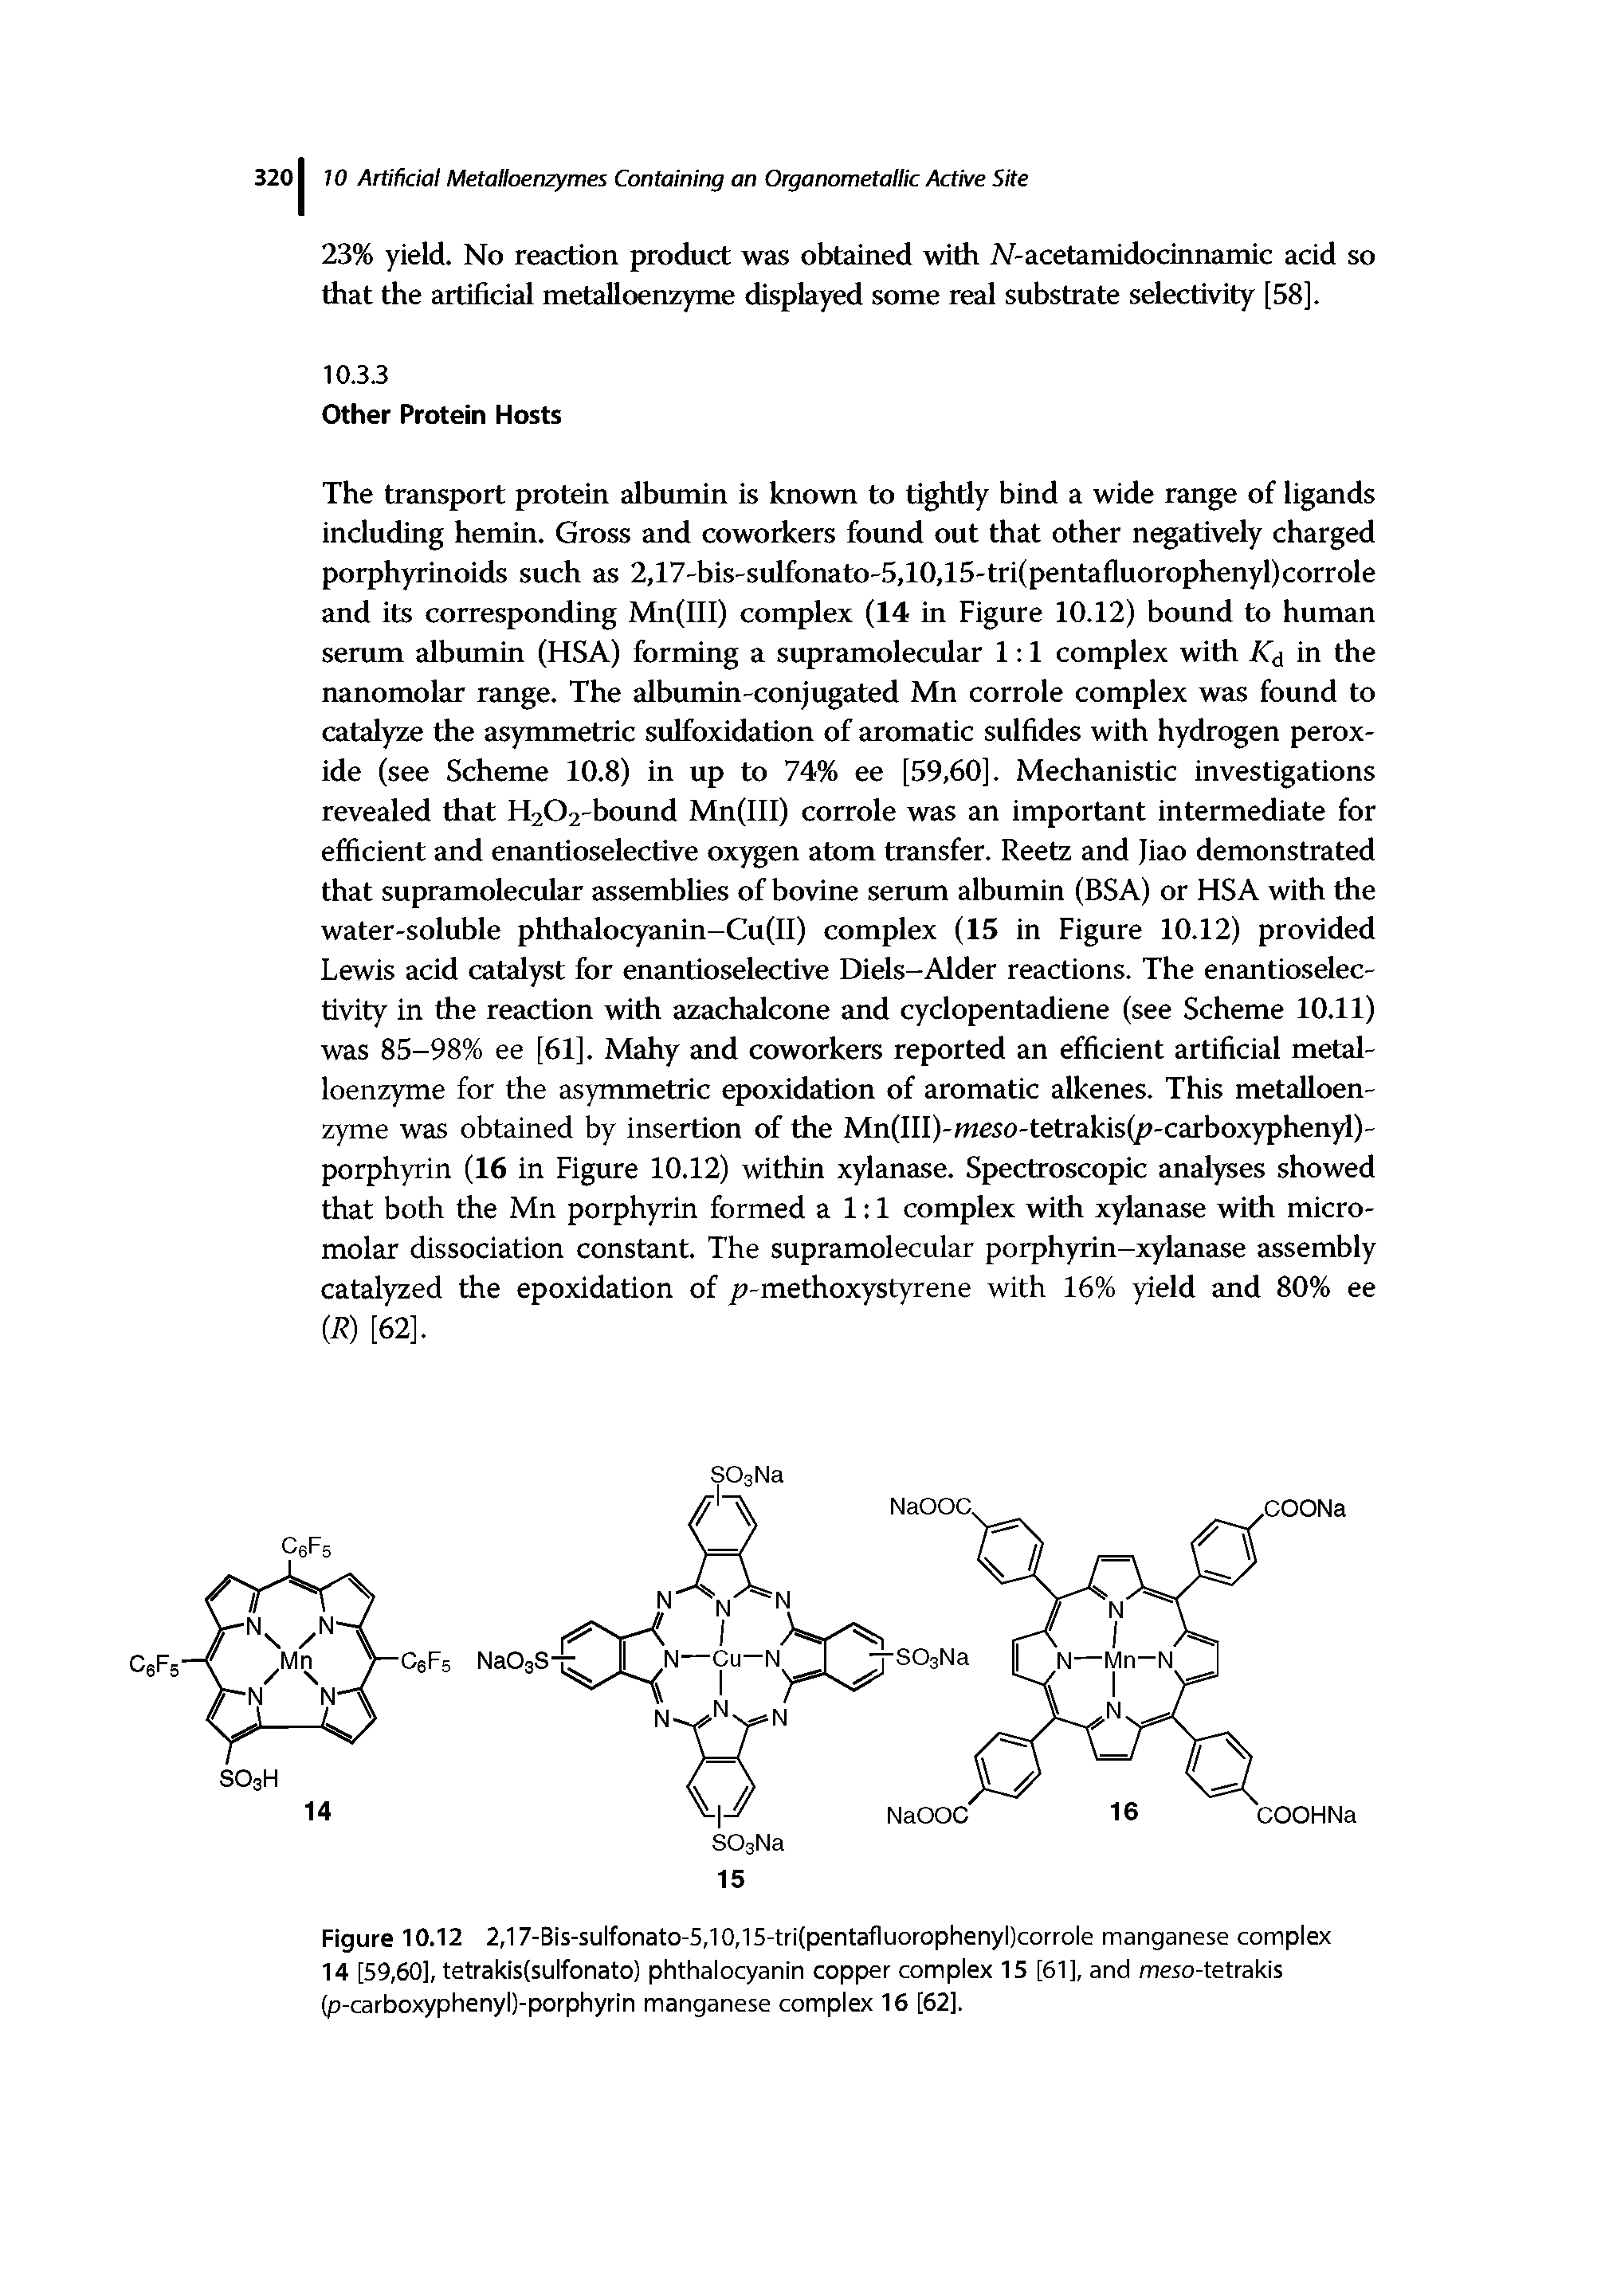 Figure 10.12 2,17-Bis-sulfonato-5,10,15-tri(pentafluorophenyl)corrole manganese complex 14 [59,60], tetrakis(sulfonato) phthalocyanin copper complex 15 [61], and meso-tetrakis (p-carboxyphenyl)-porphyrln manganese complex 16 [62].